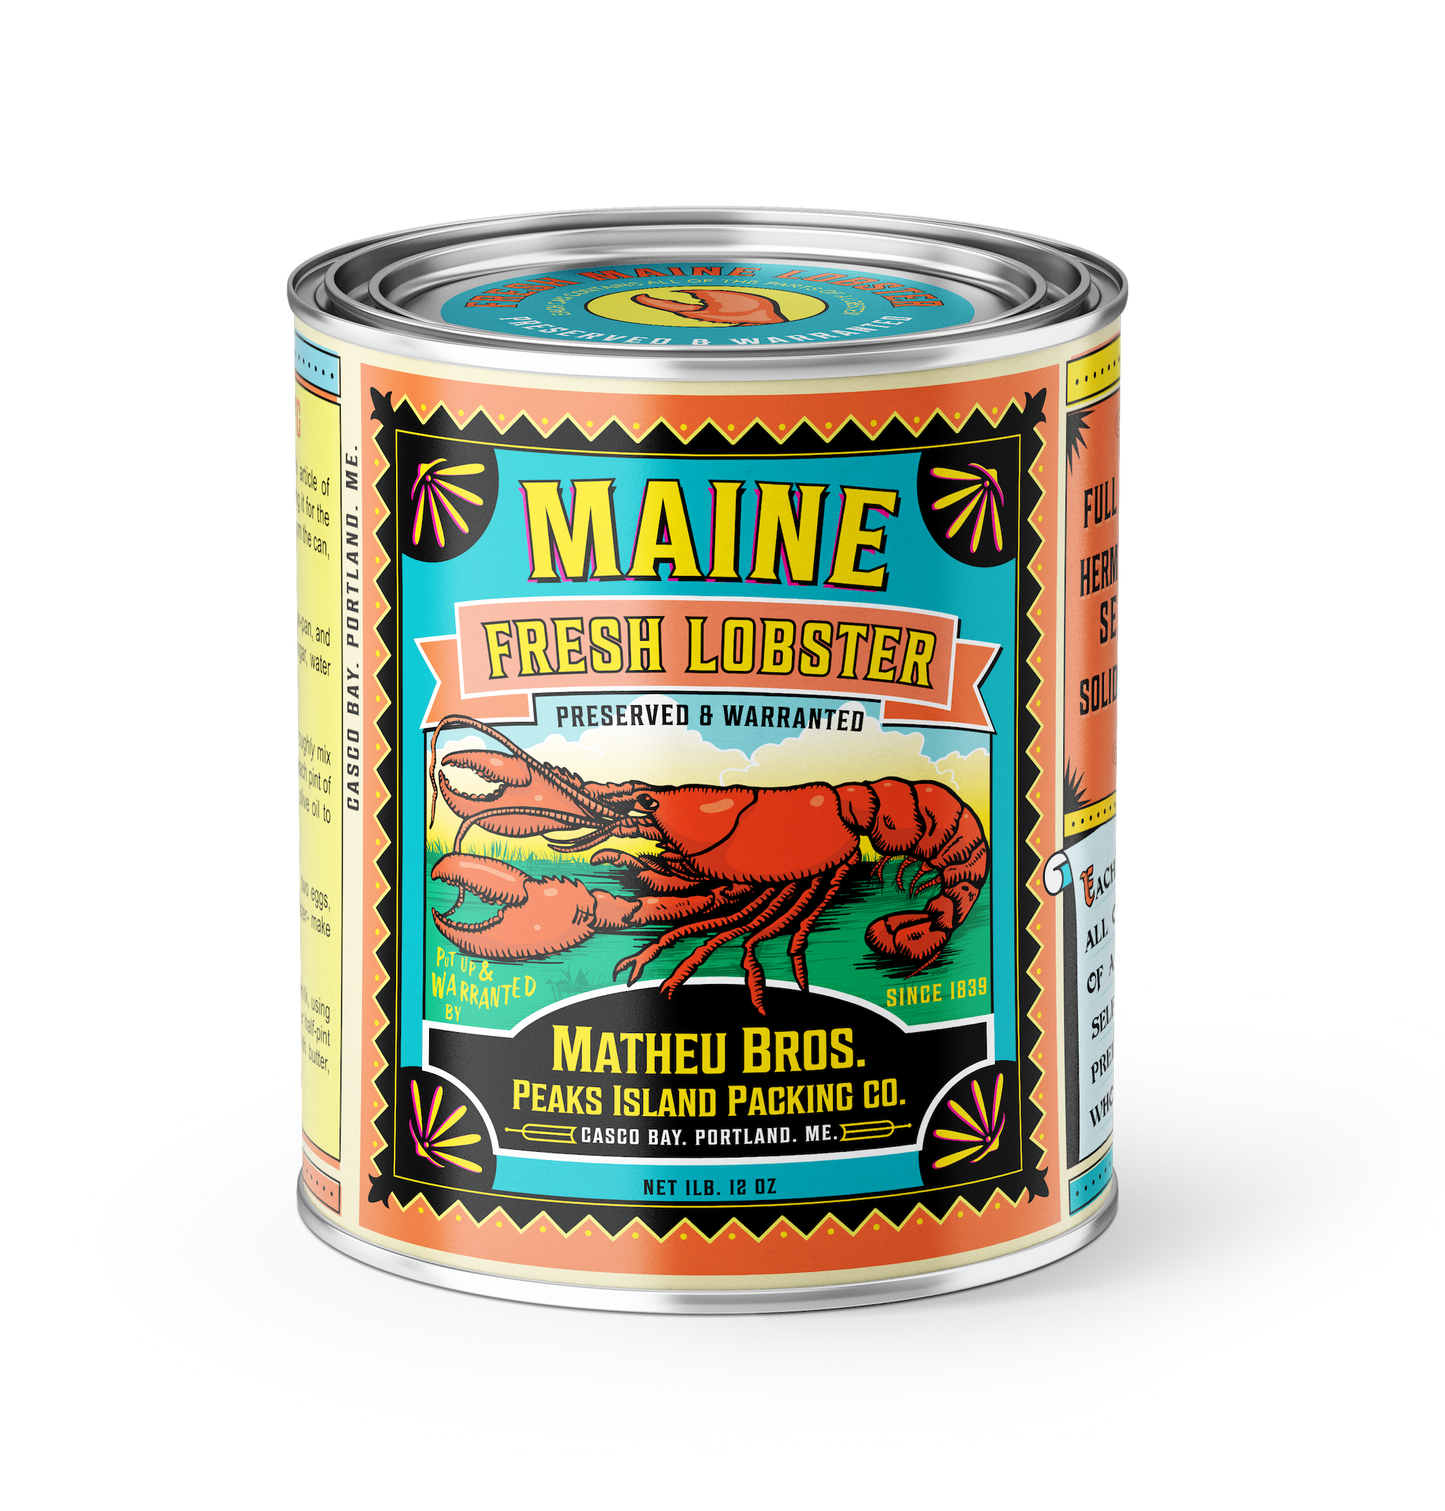 Vintage Maine Lobster Candle